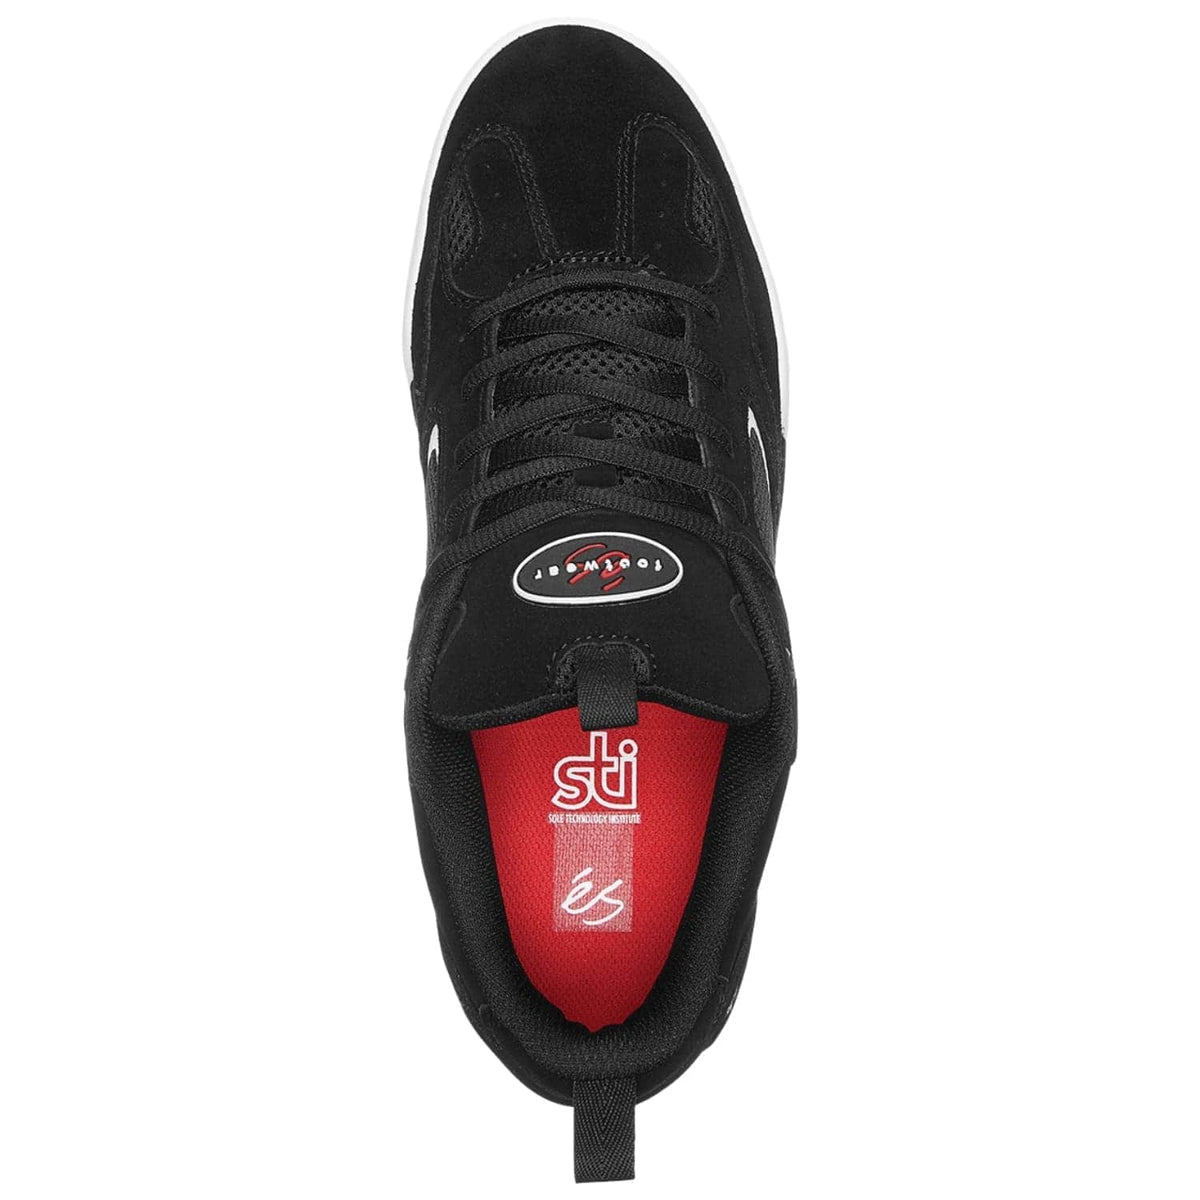 eS Quattro Skate Shoes - Black - Mens Skate Shoes by eS